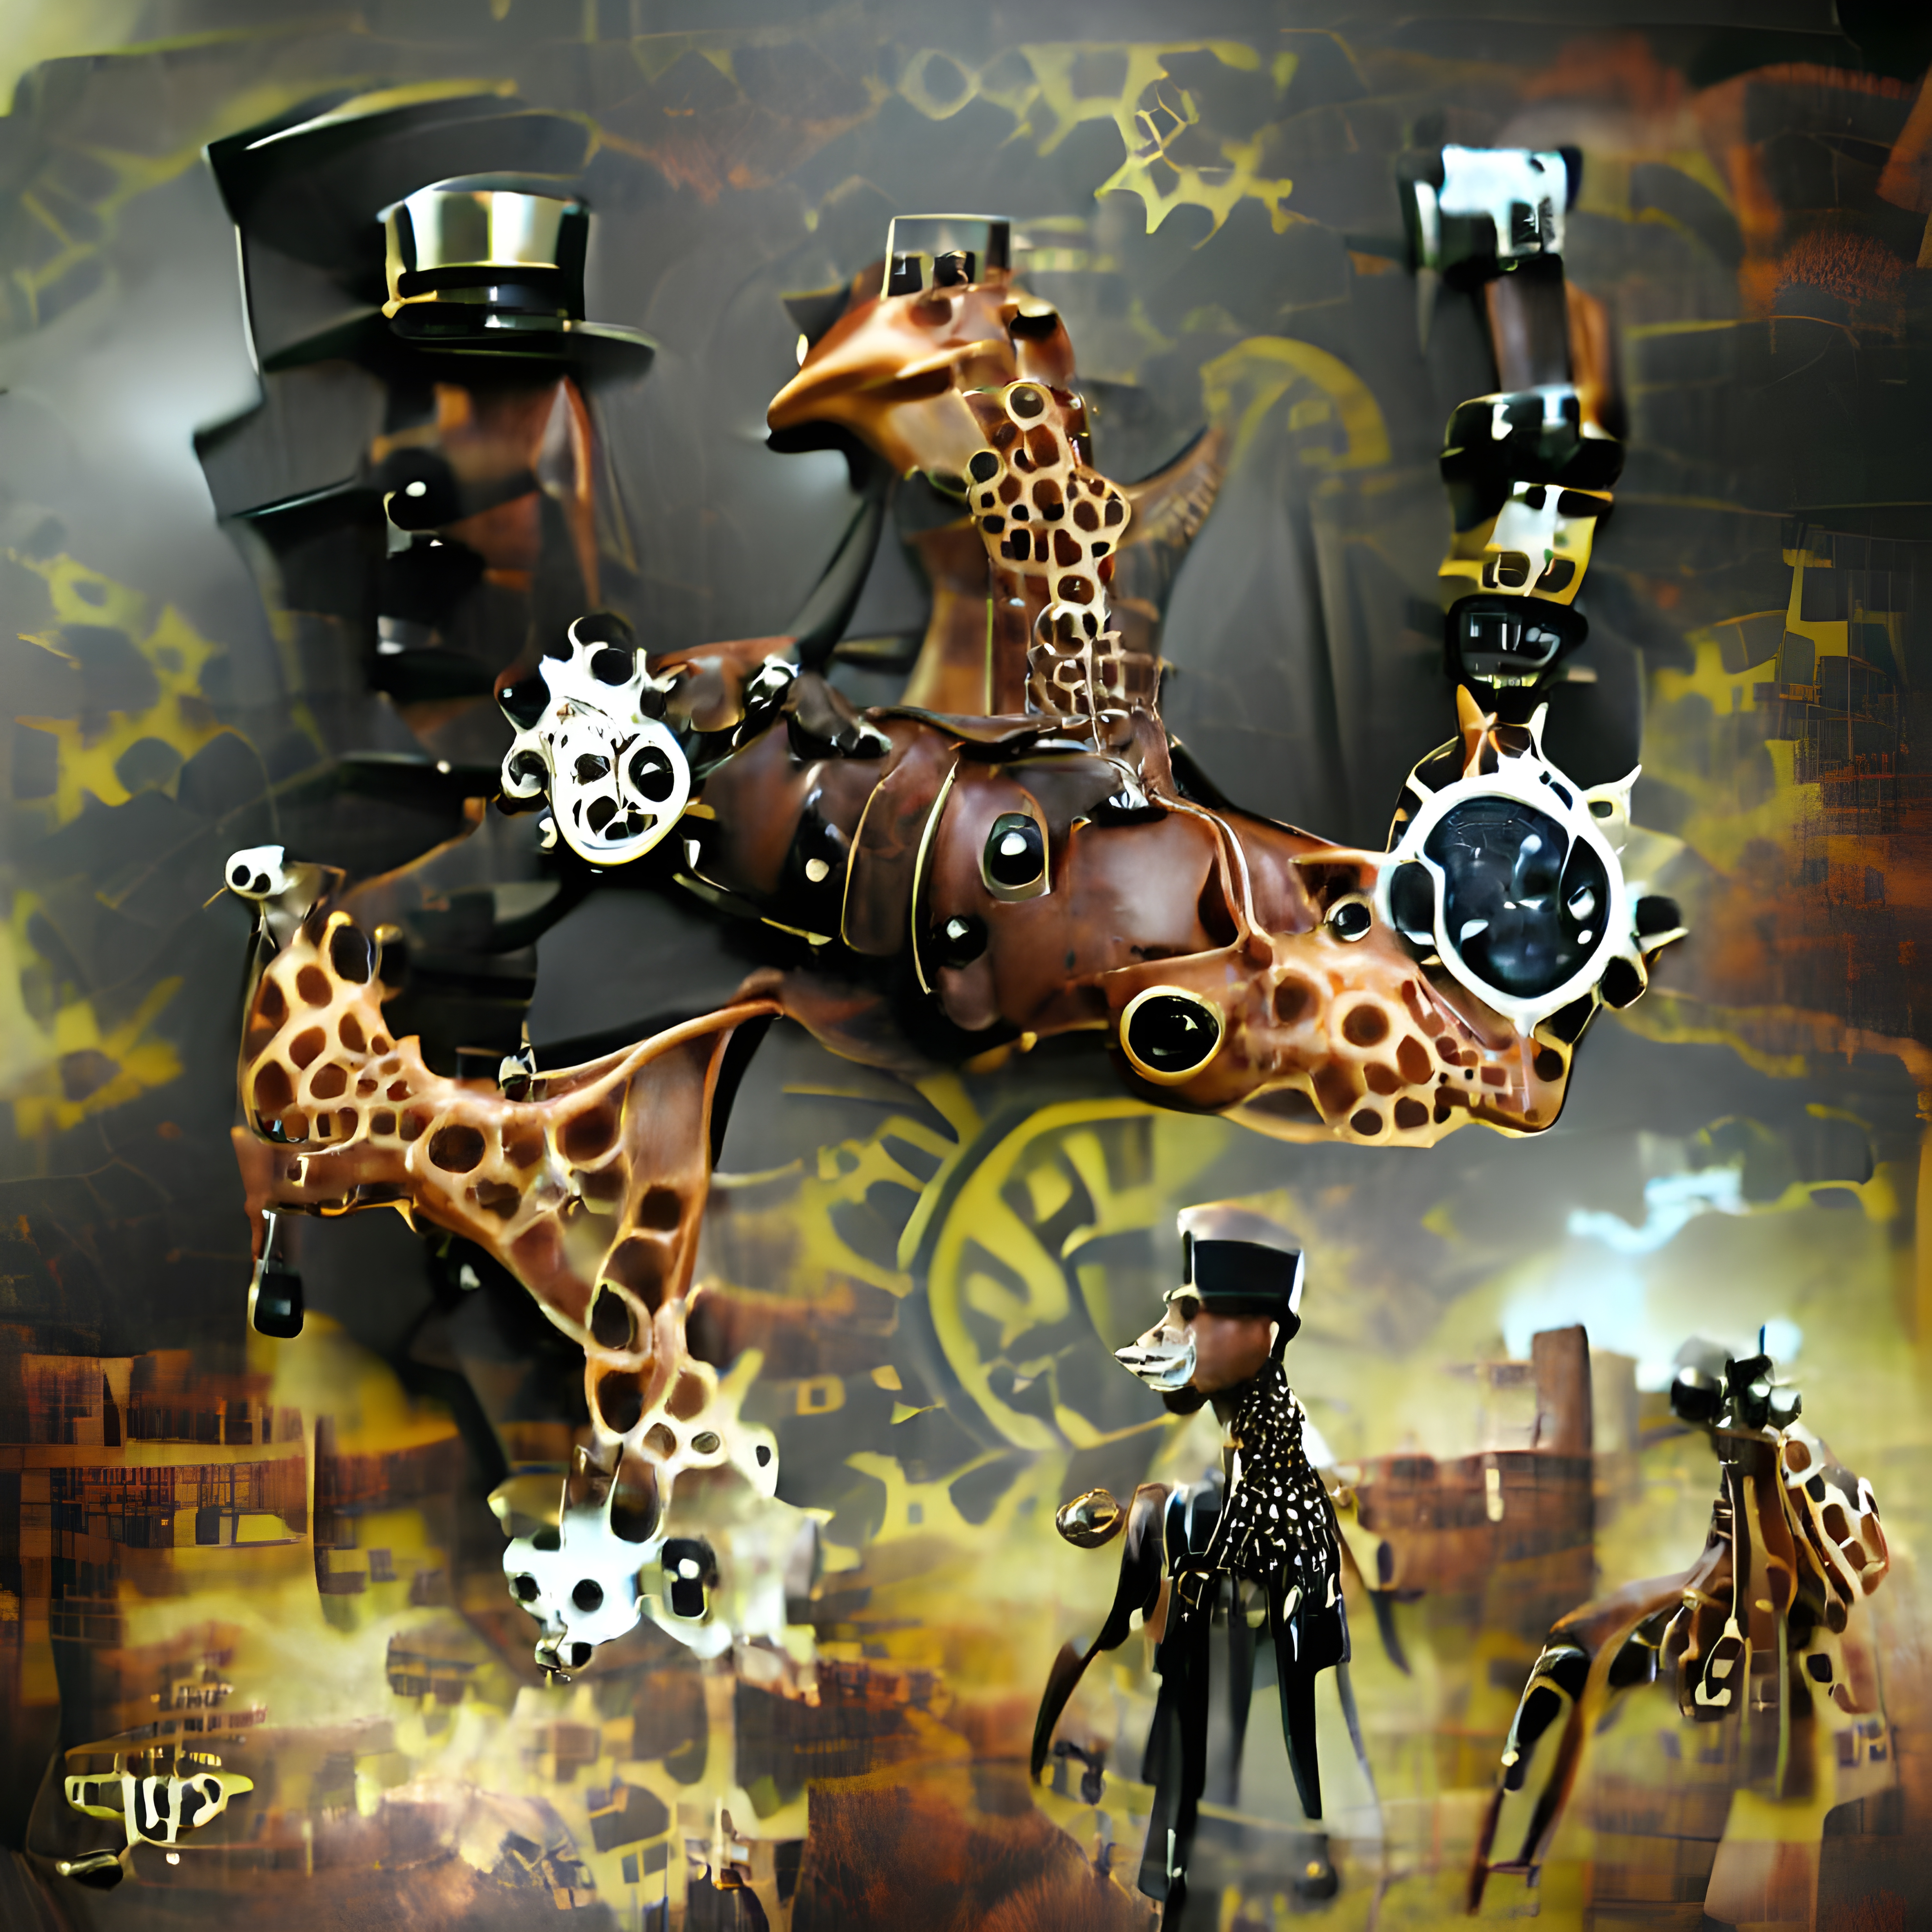 The Dark Giraffes